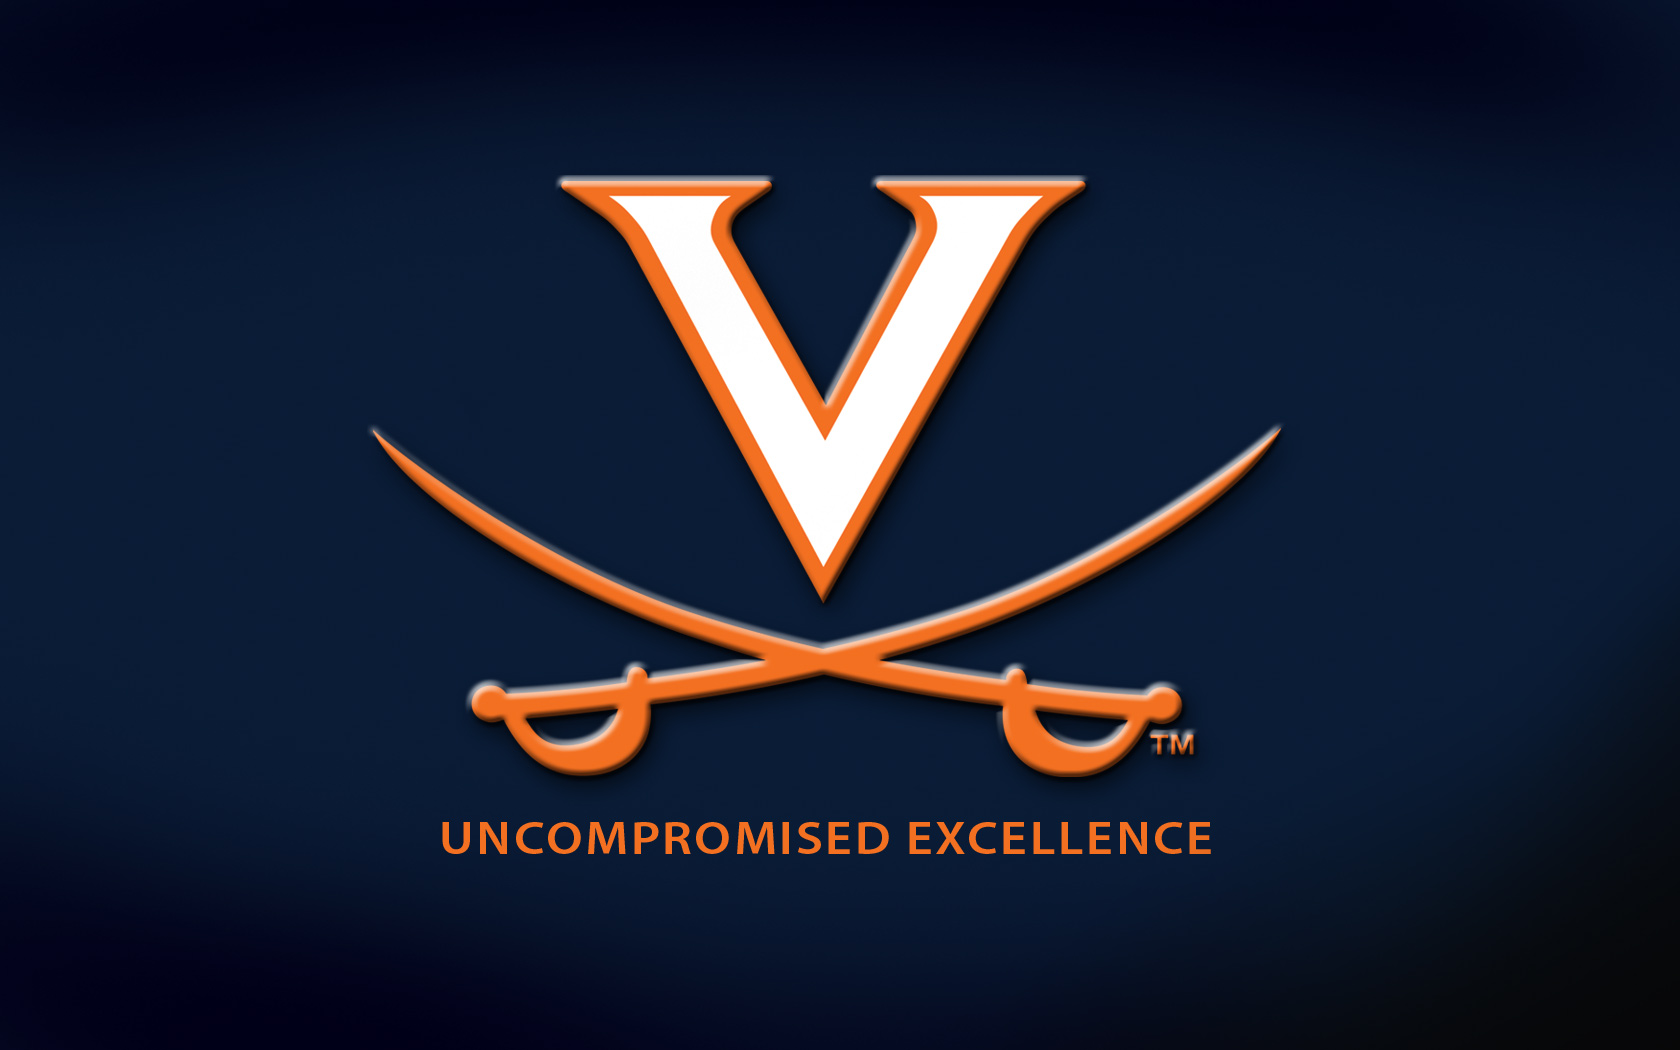 University Of Virginia Official Athletics Website Uva Cavaliers